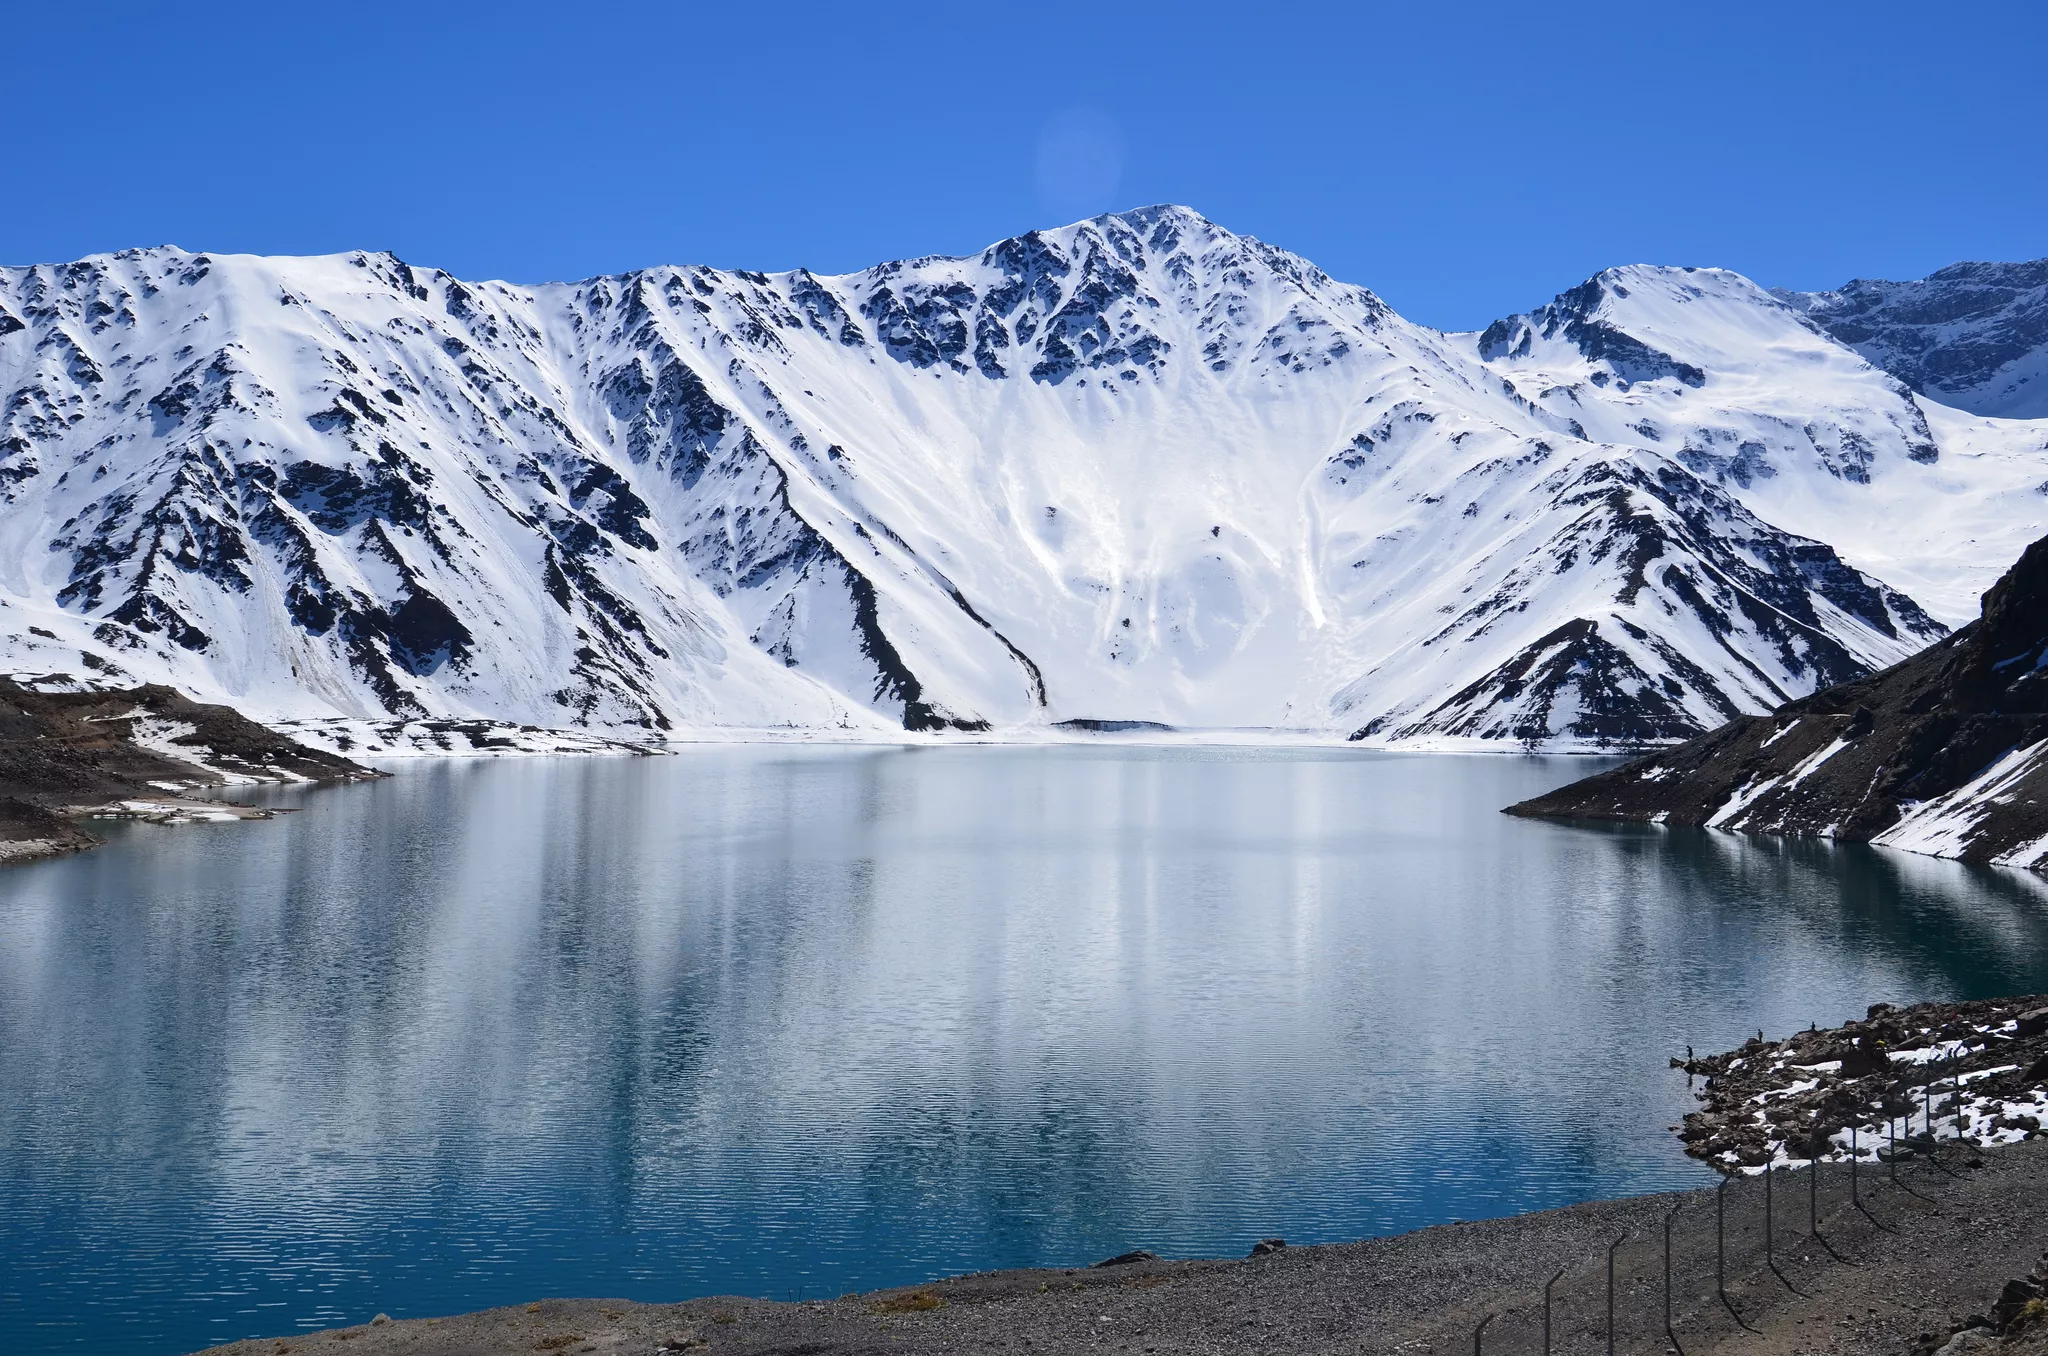 Embalse El Yeso in Chile, South America | Trekking & Hiking - Rated 4